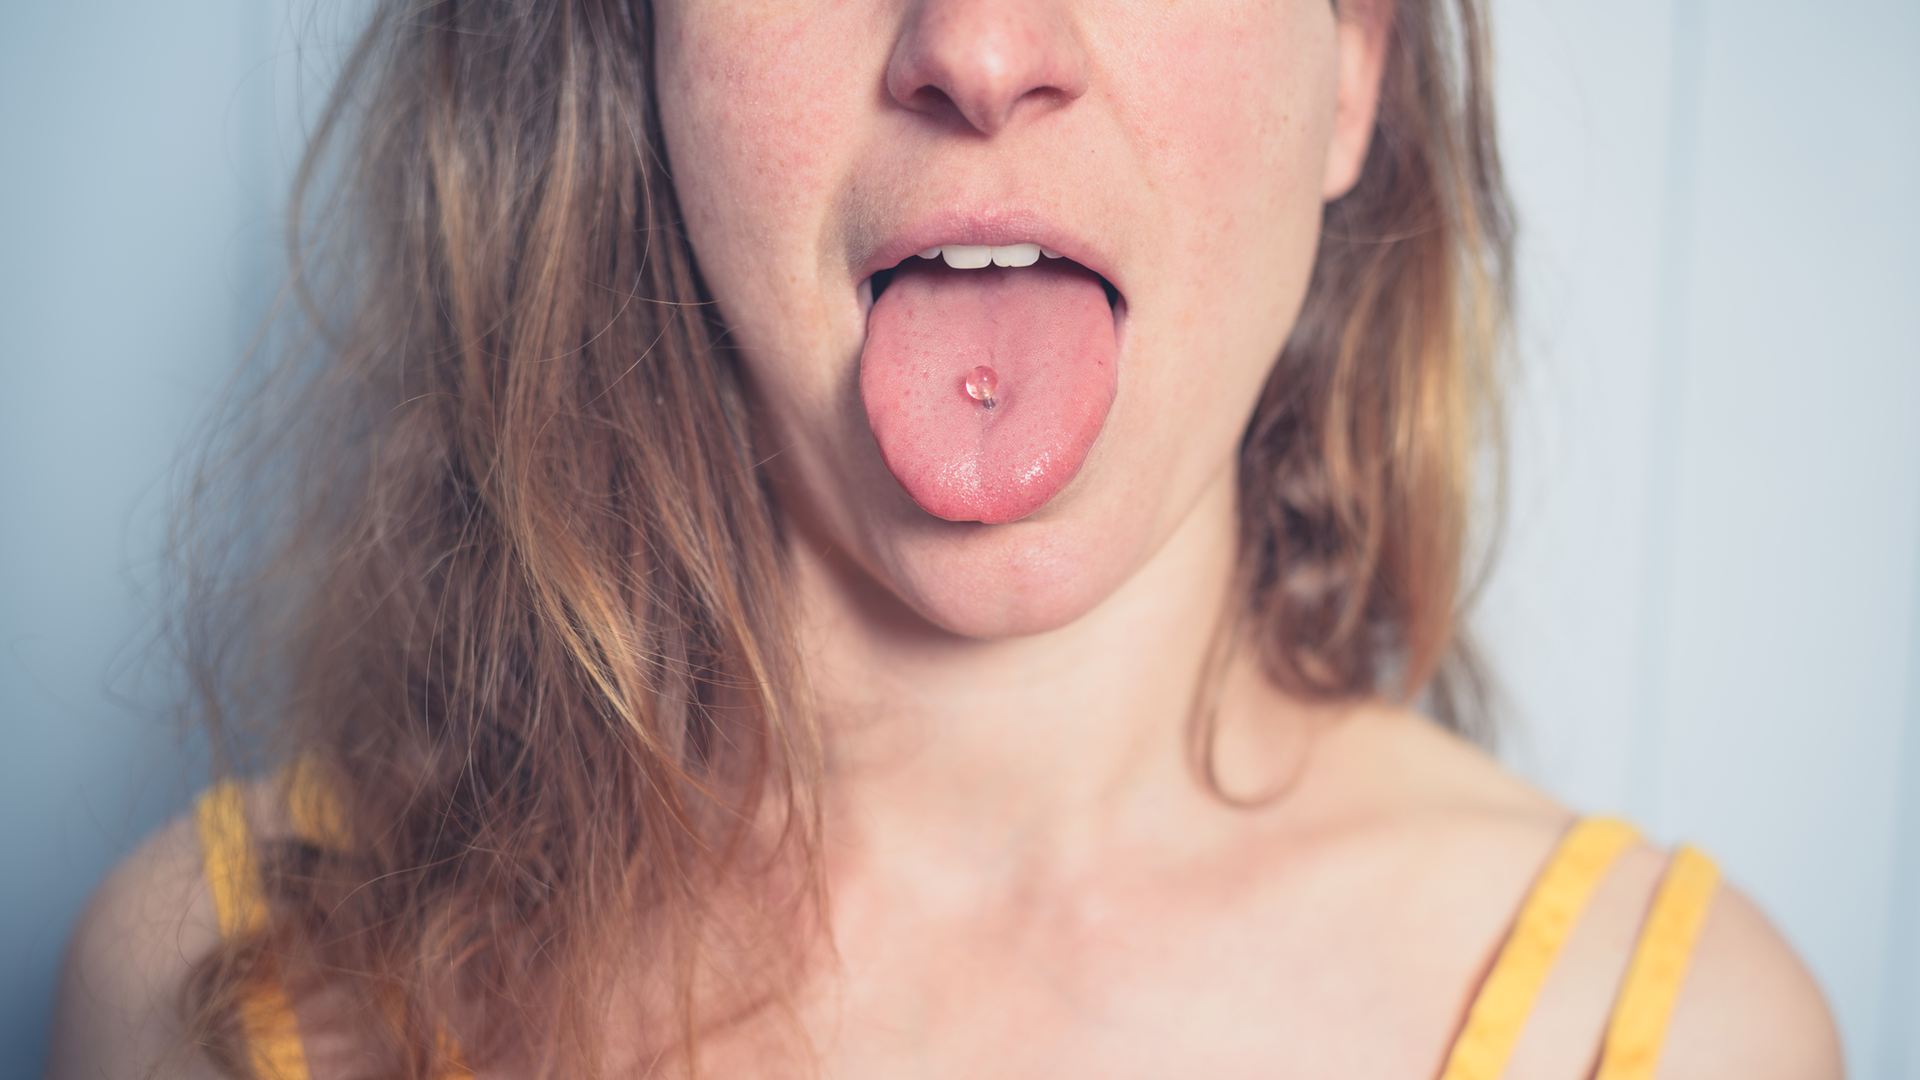 tip tongue piercing